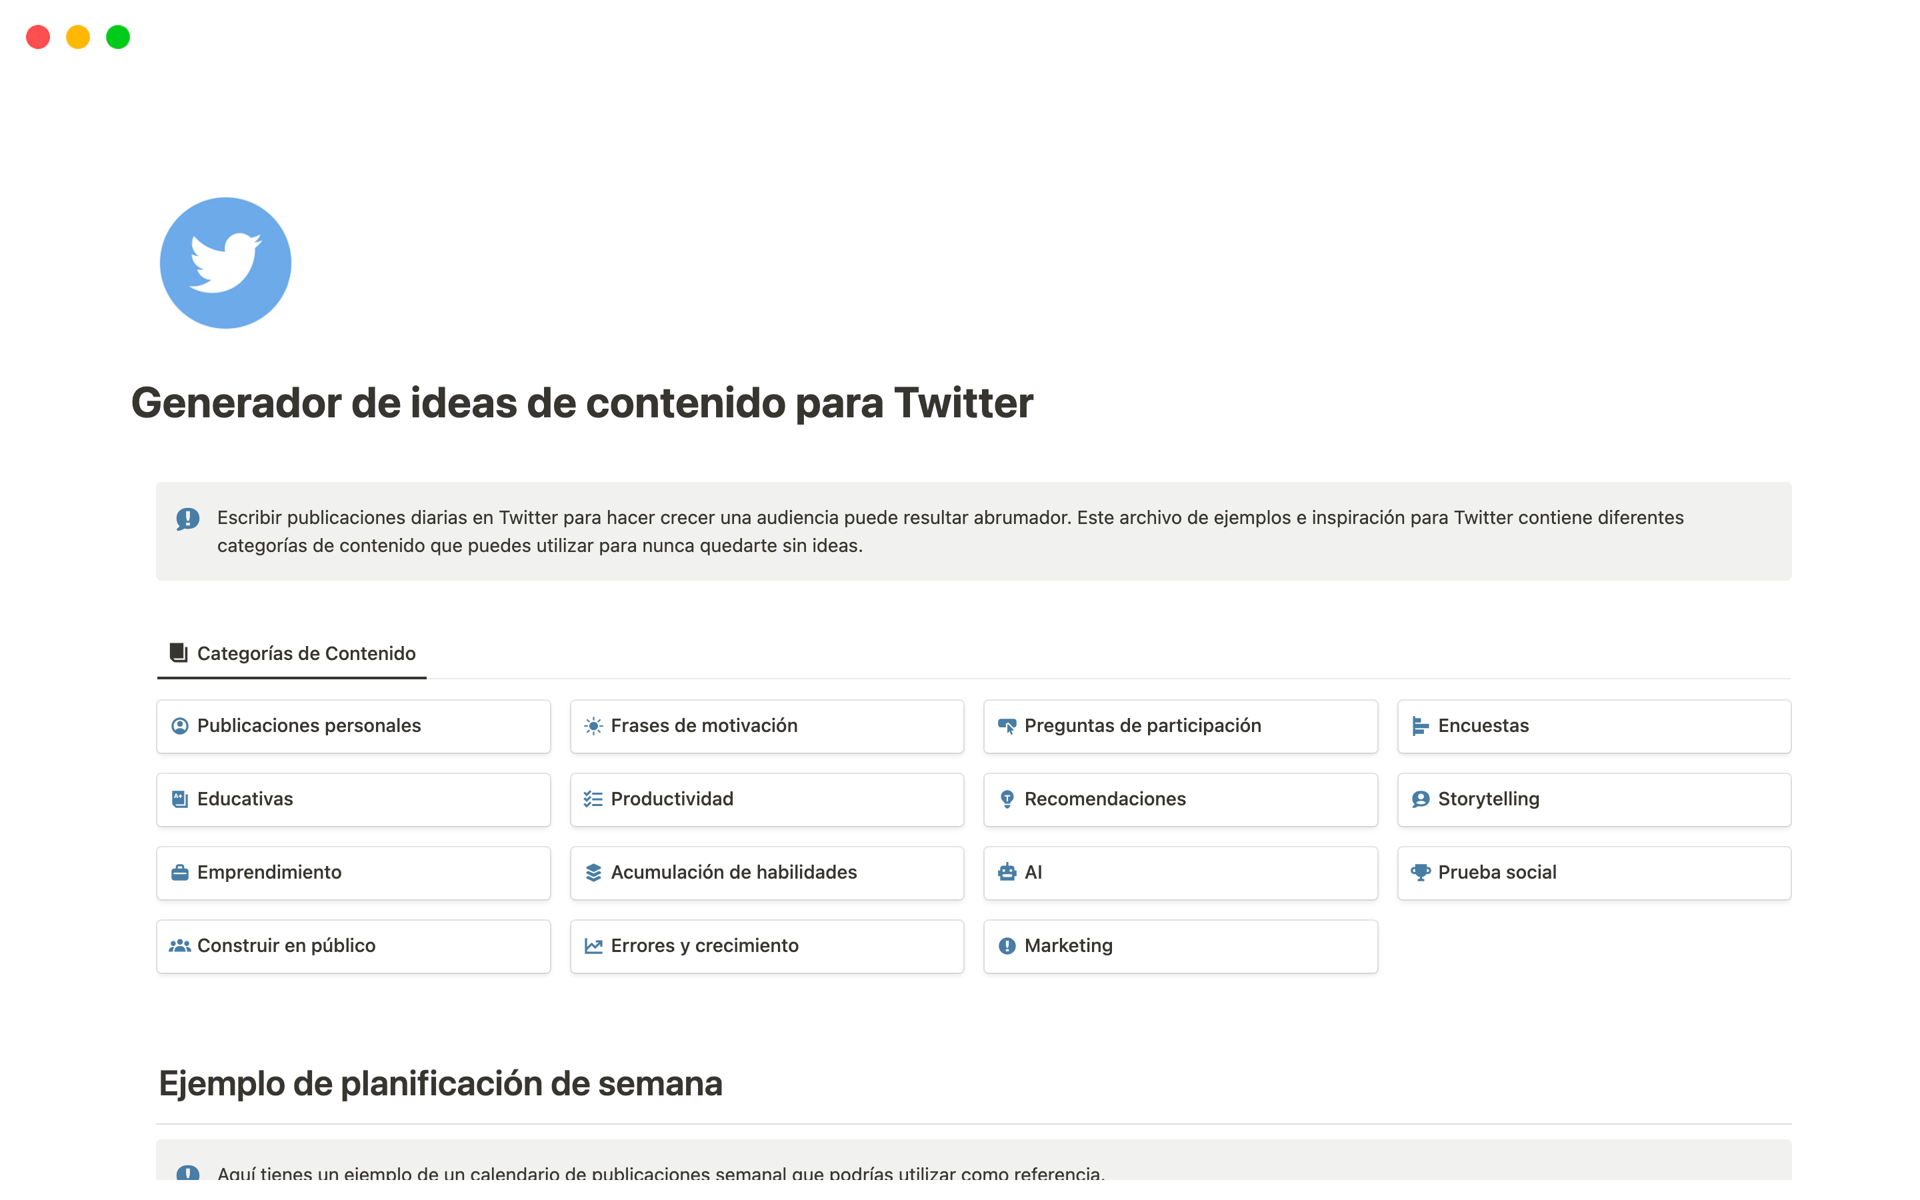 A template preview for Generador de ideas de contenido para Twitter